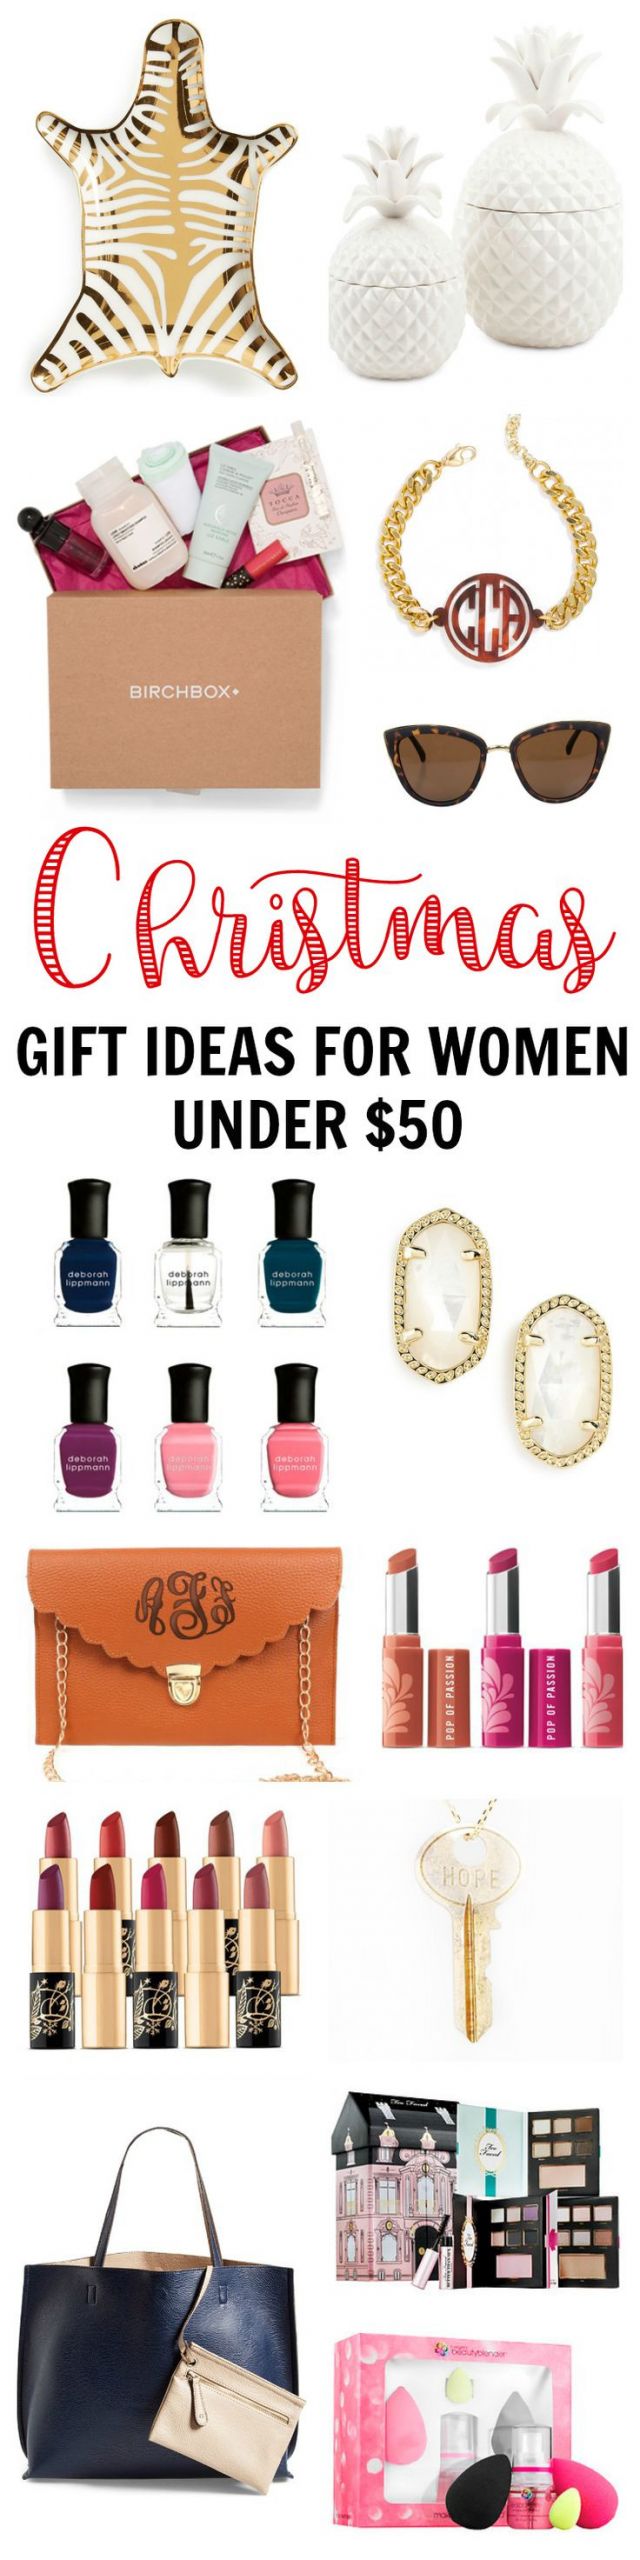 Girlfriend Gift Ideas Under $50
 Christmas Gift Ideas for Women under $50